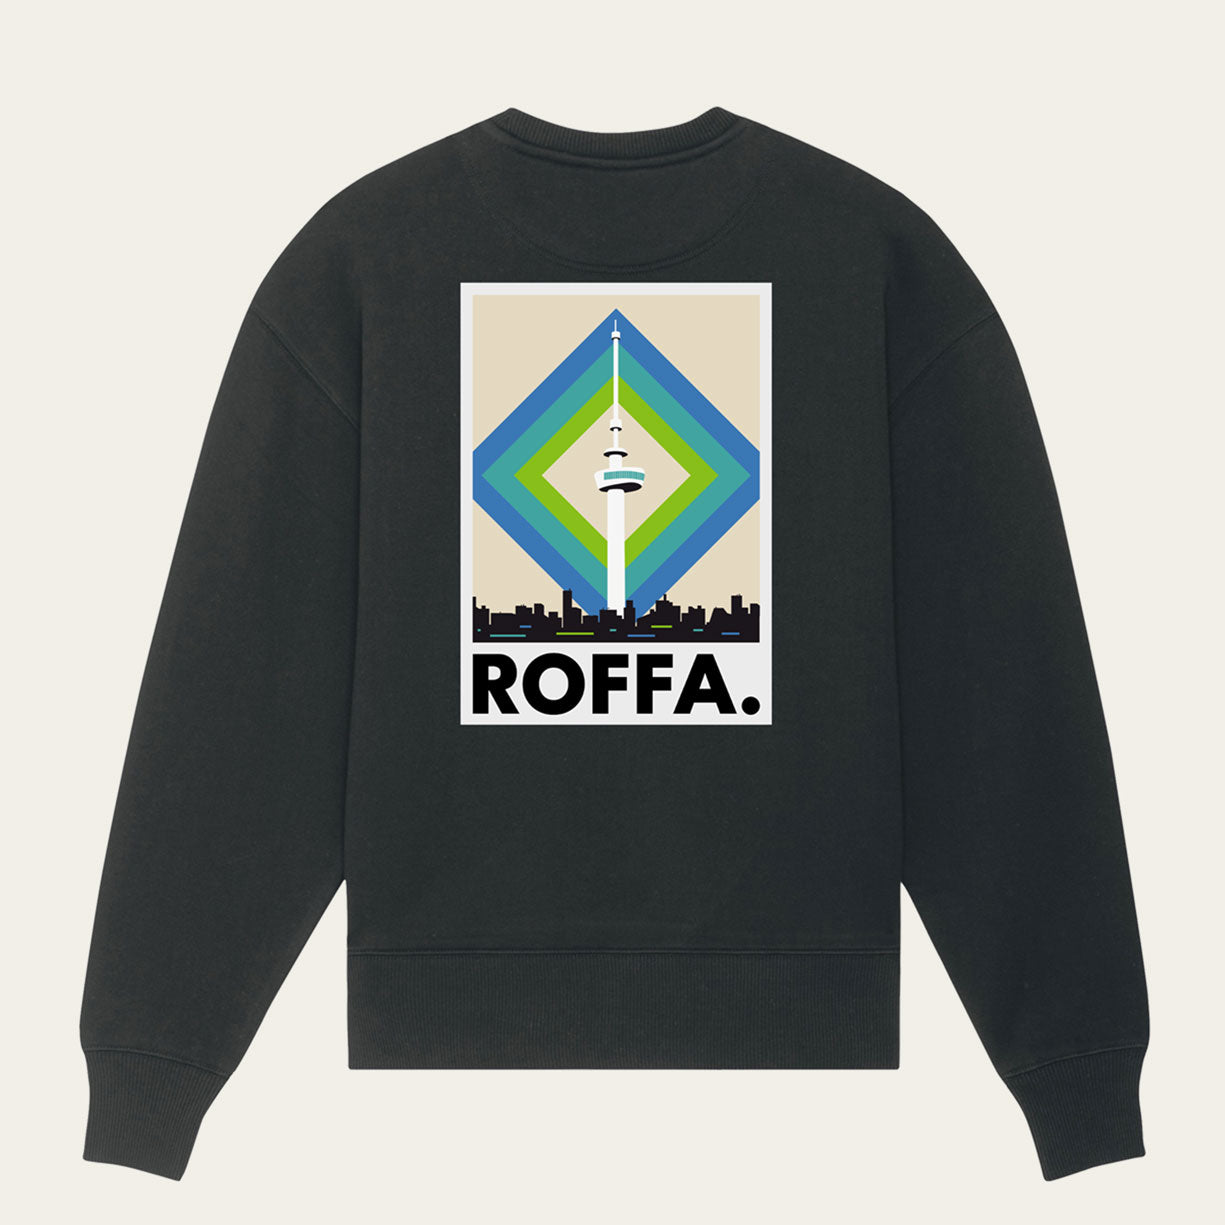 Zwarte trui met ROFFA. en euromast opdruk